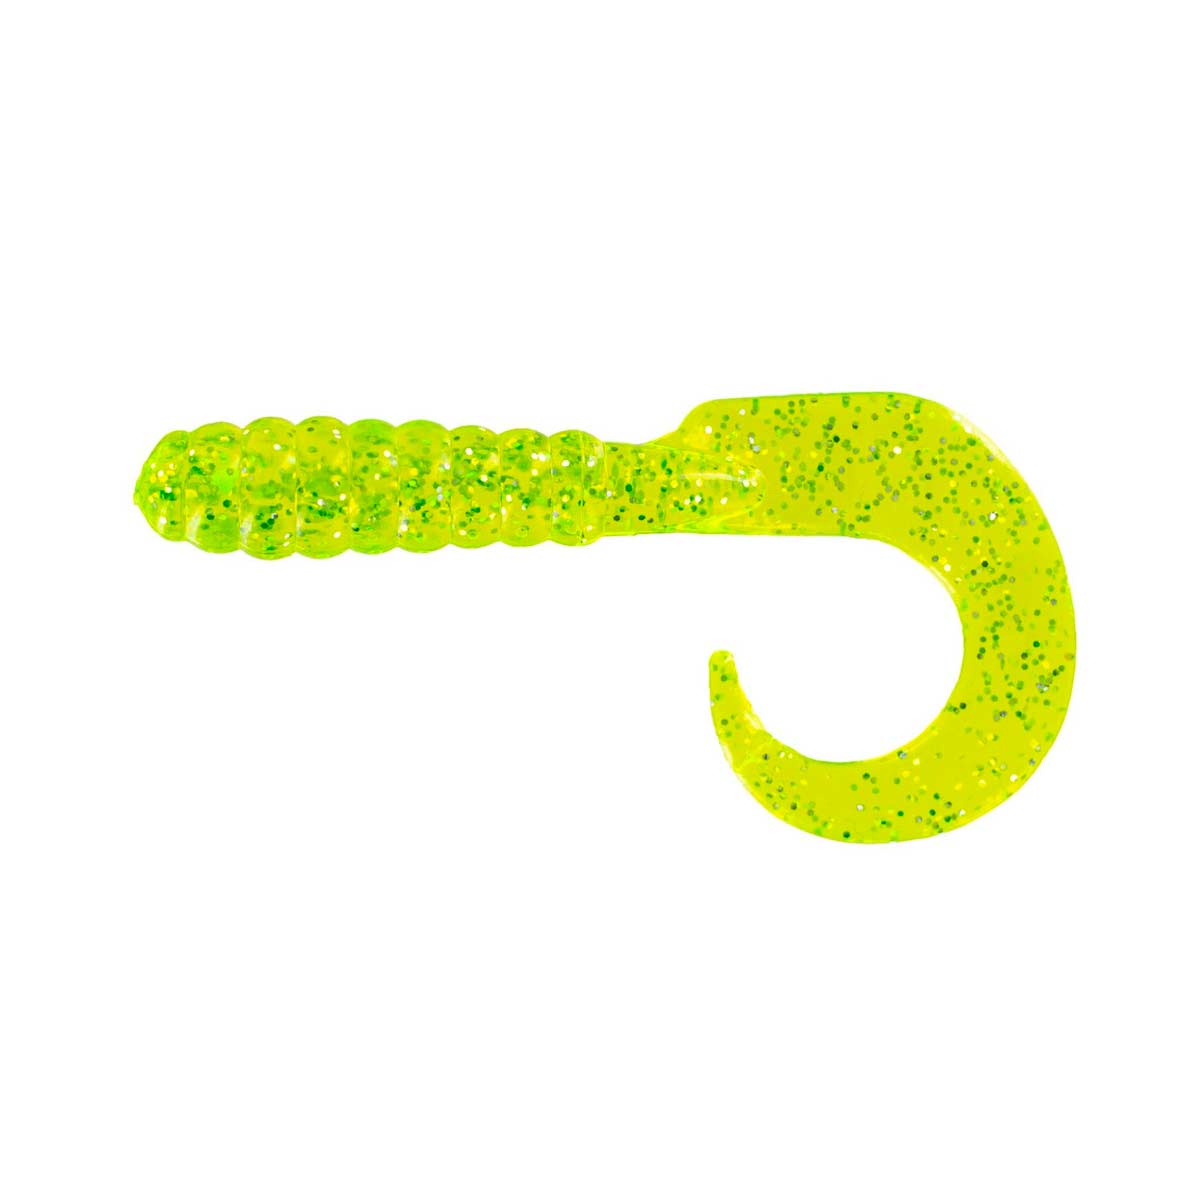 Curl Tail Grub_Chartreuse Shine